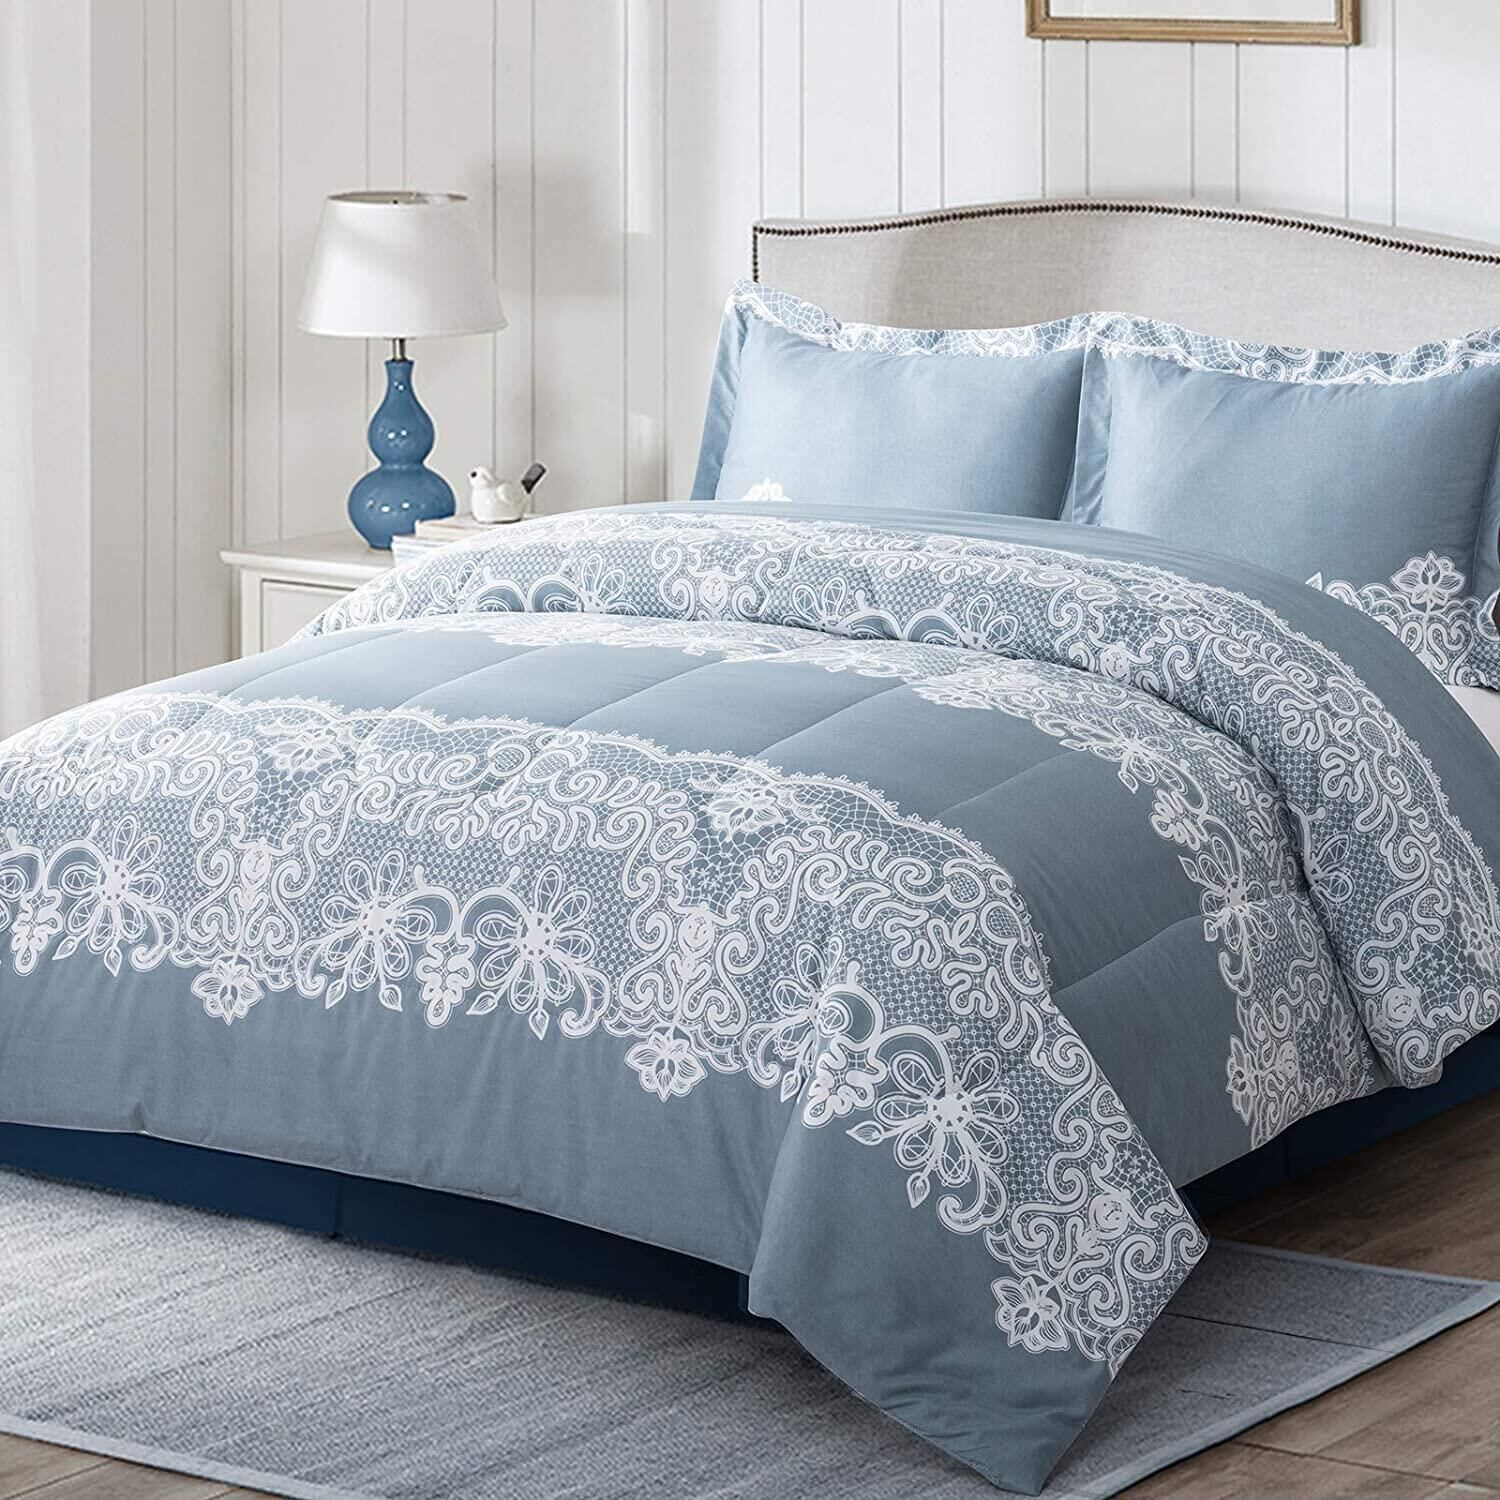 Shatex Twin Comforter 2 Pieces Bedding Comforter Set– Ultra Soft 100% Microfiber Polyester被子两件套